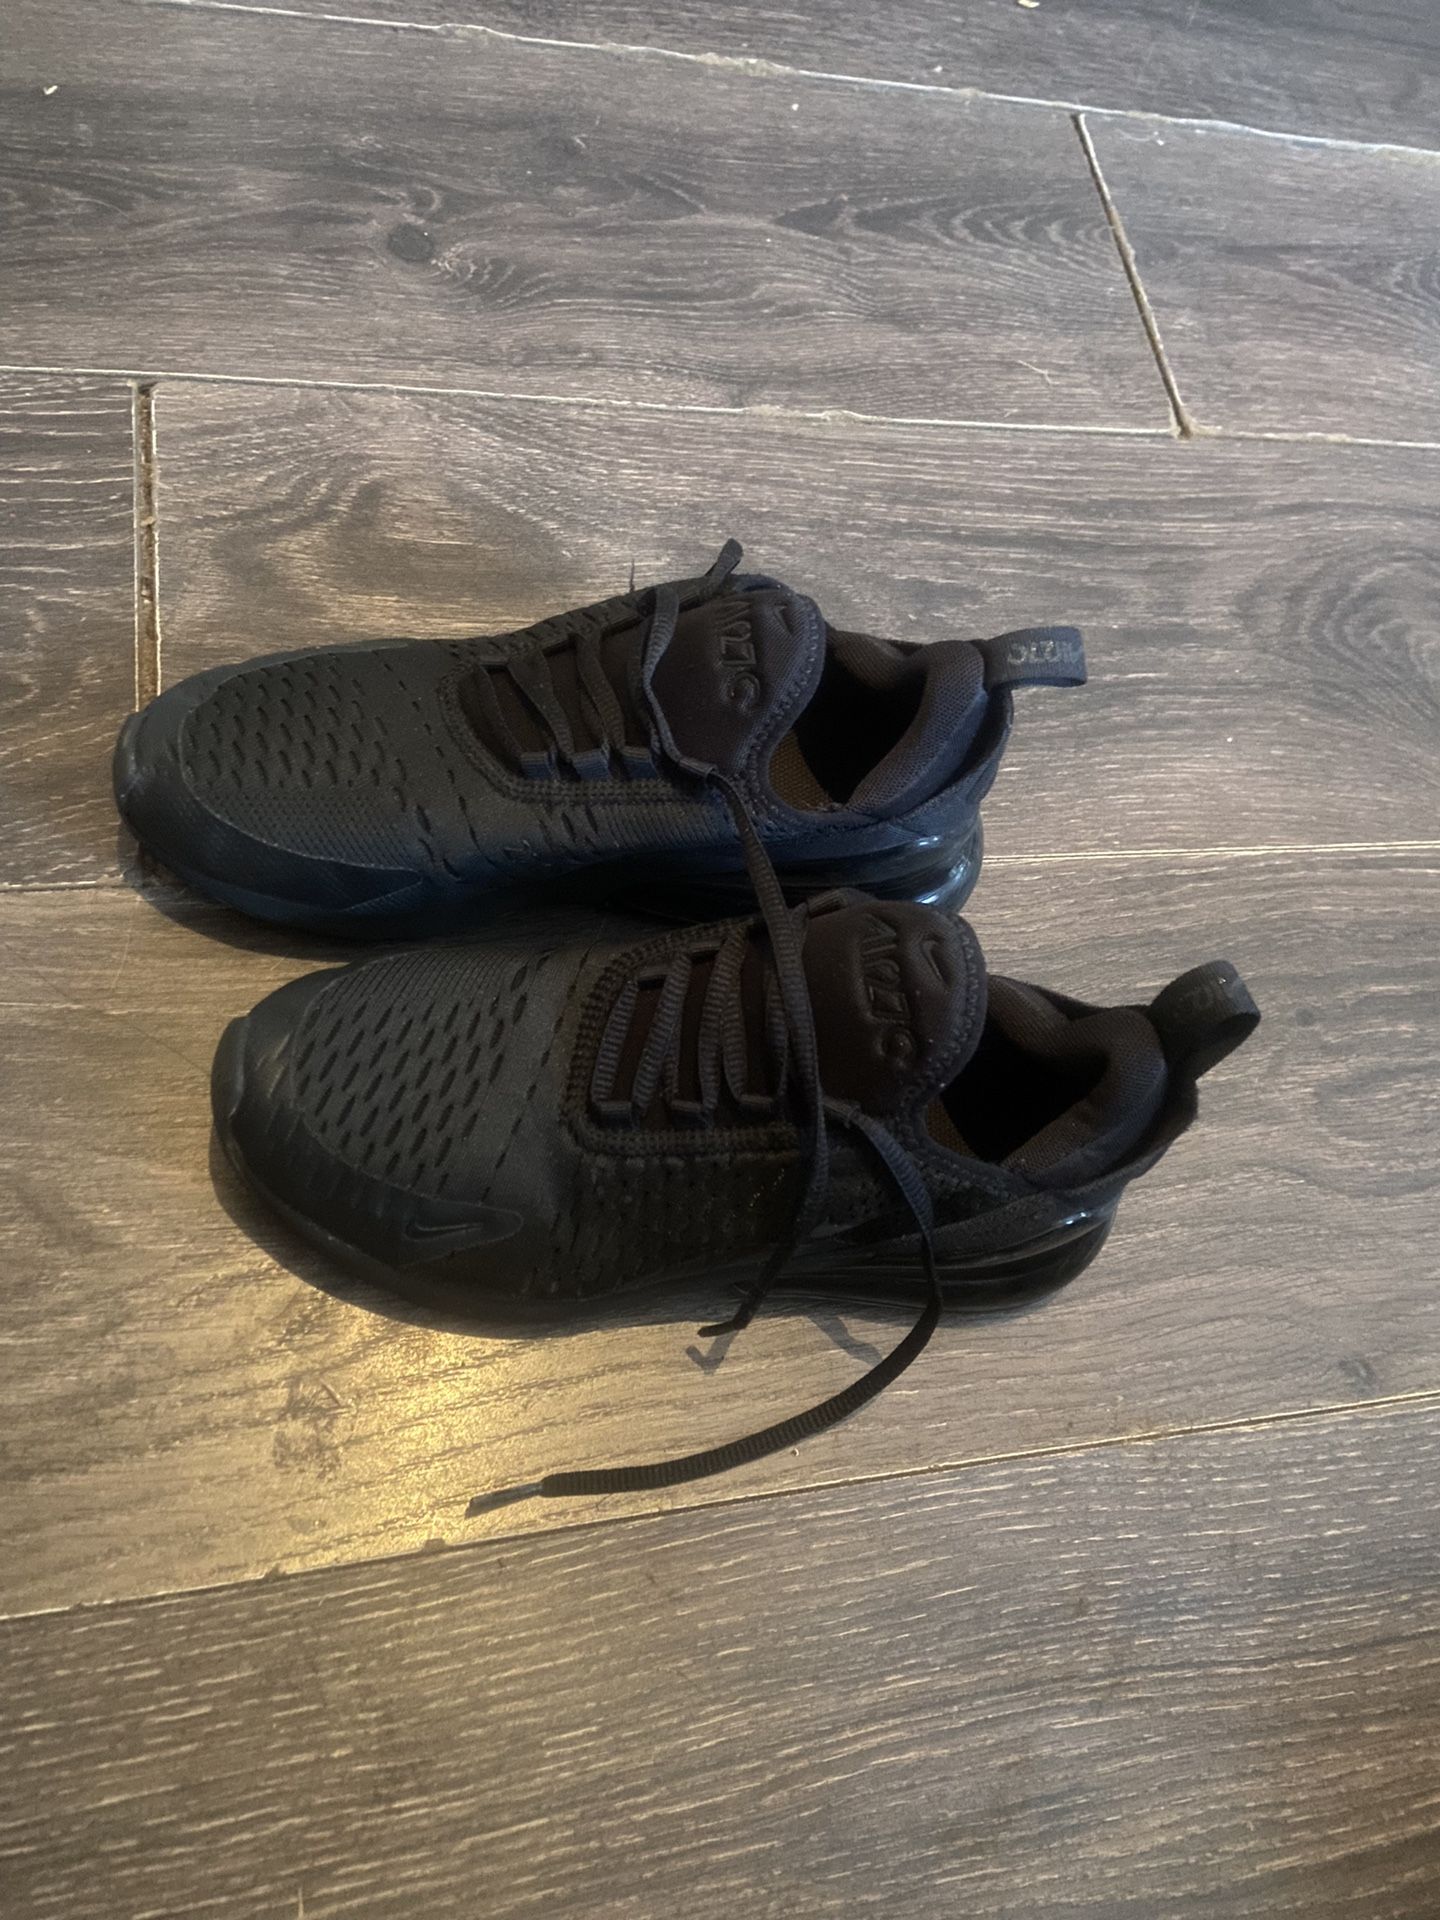 Nike Black Shoes $20